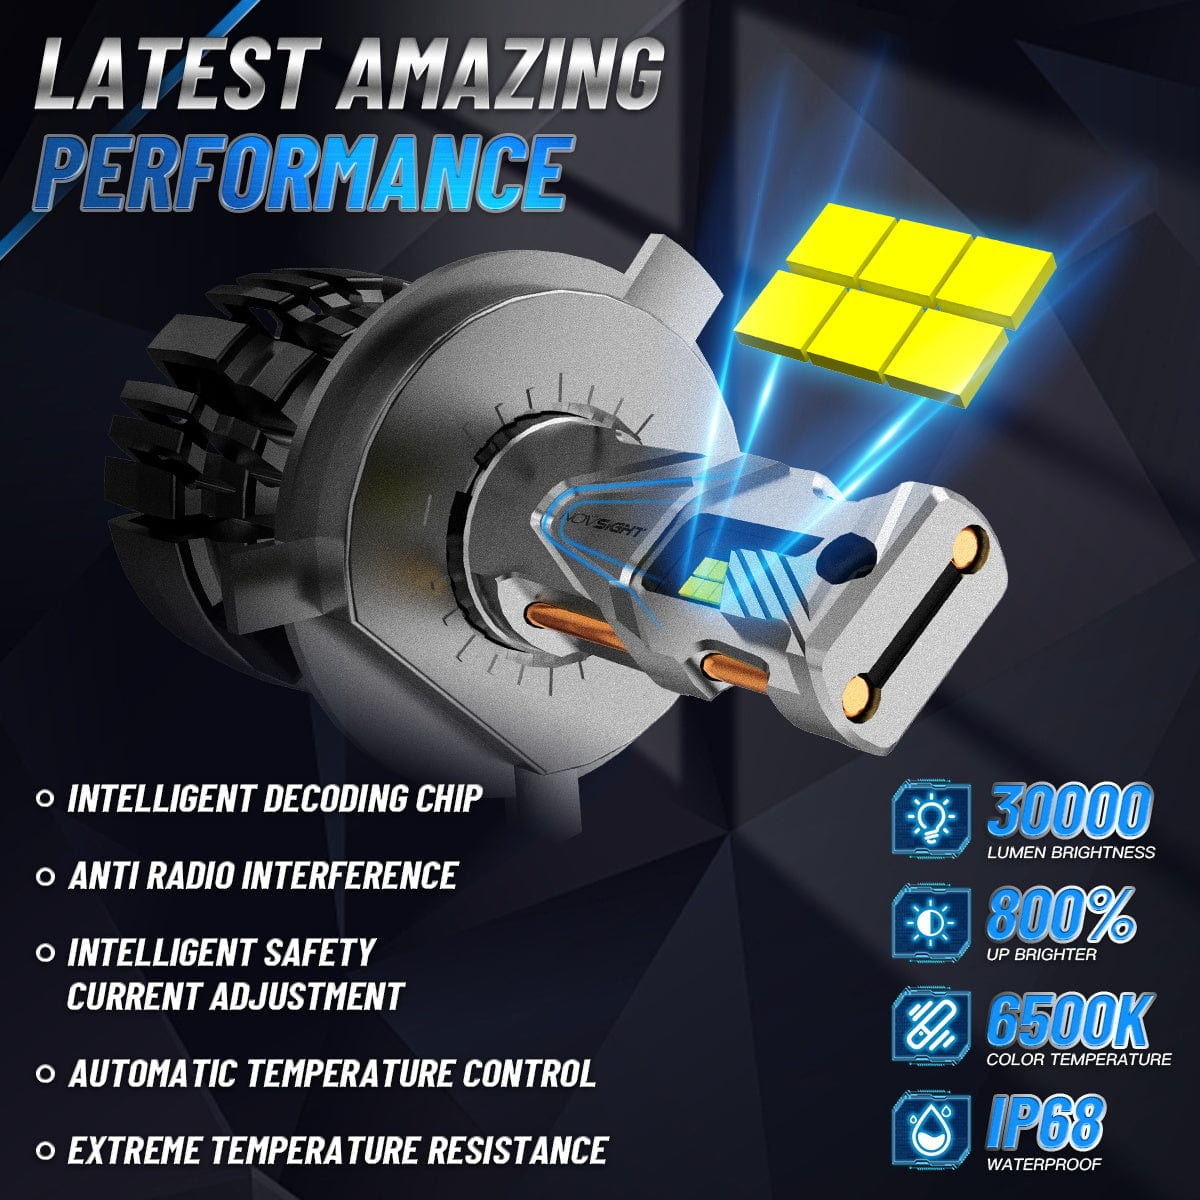 N67 Pro Series | H7 LED Bulbs Intelligent Cooling System 140W 30000LM 6500K | 2 Bulbs - NOVSIGHT